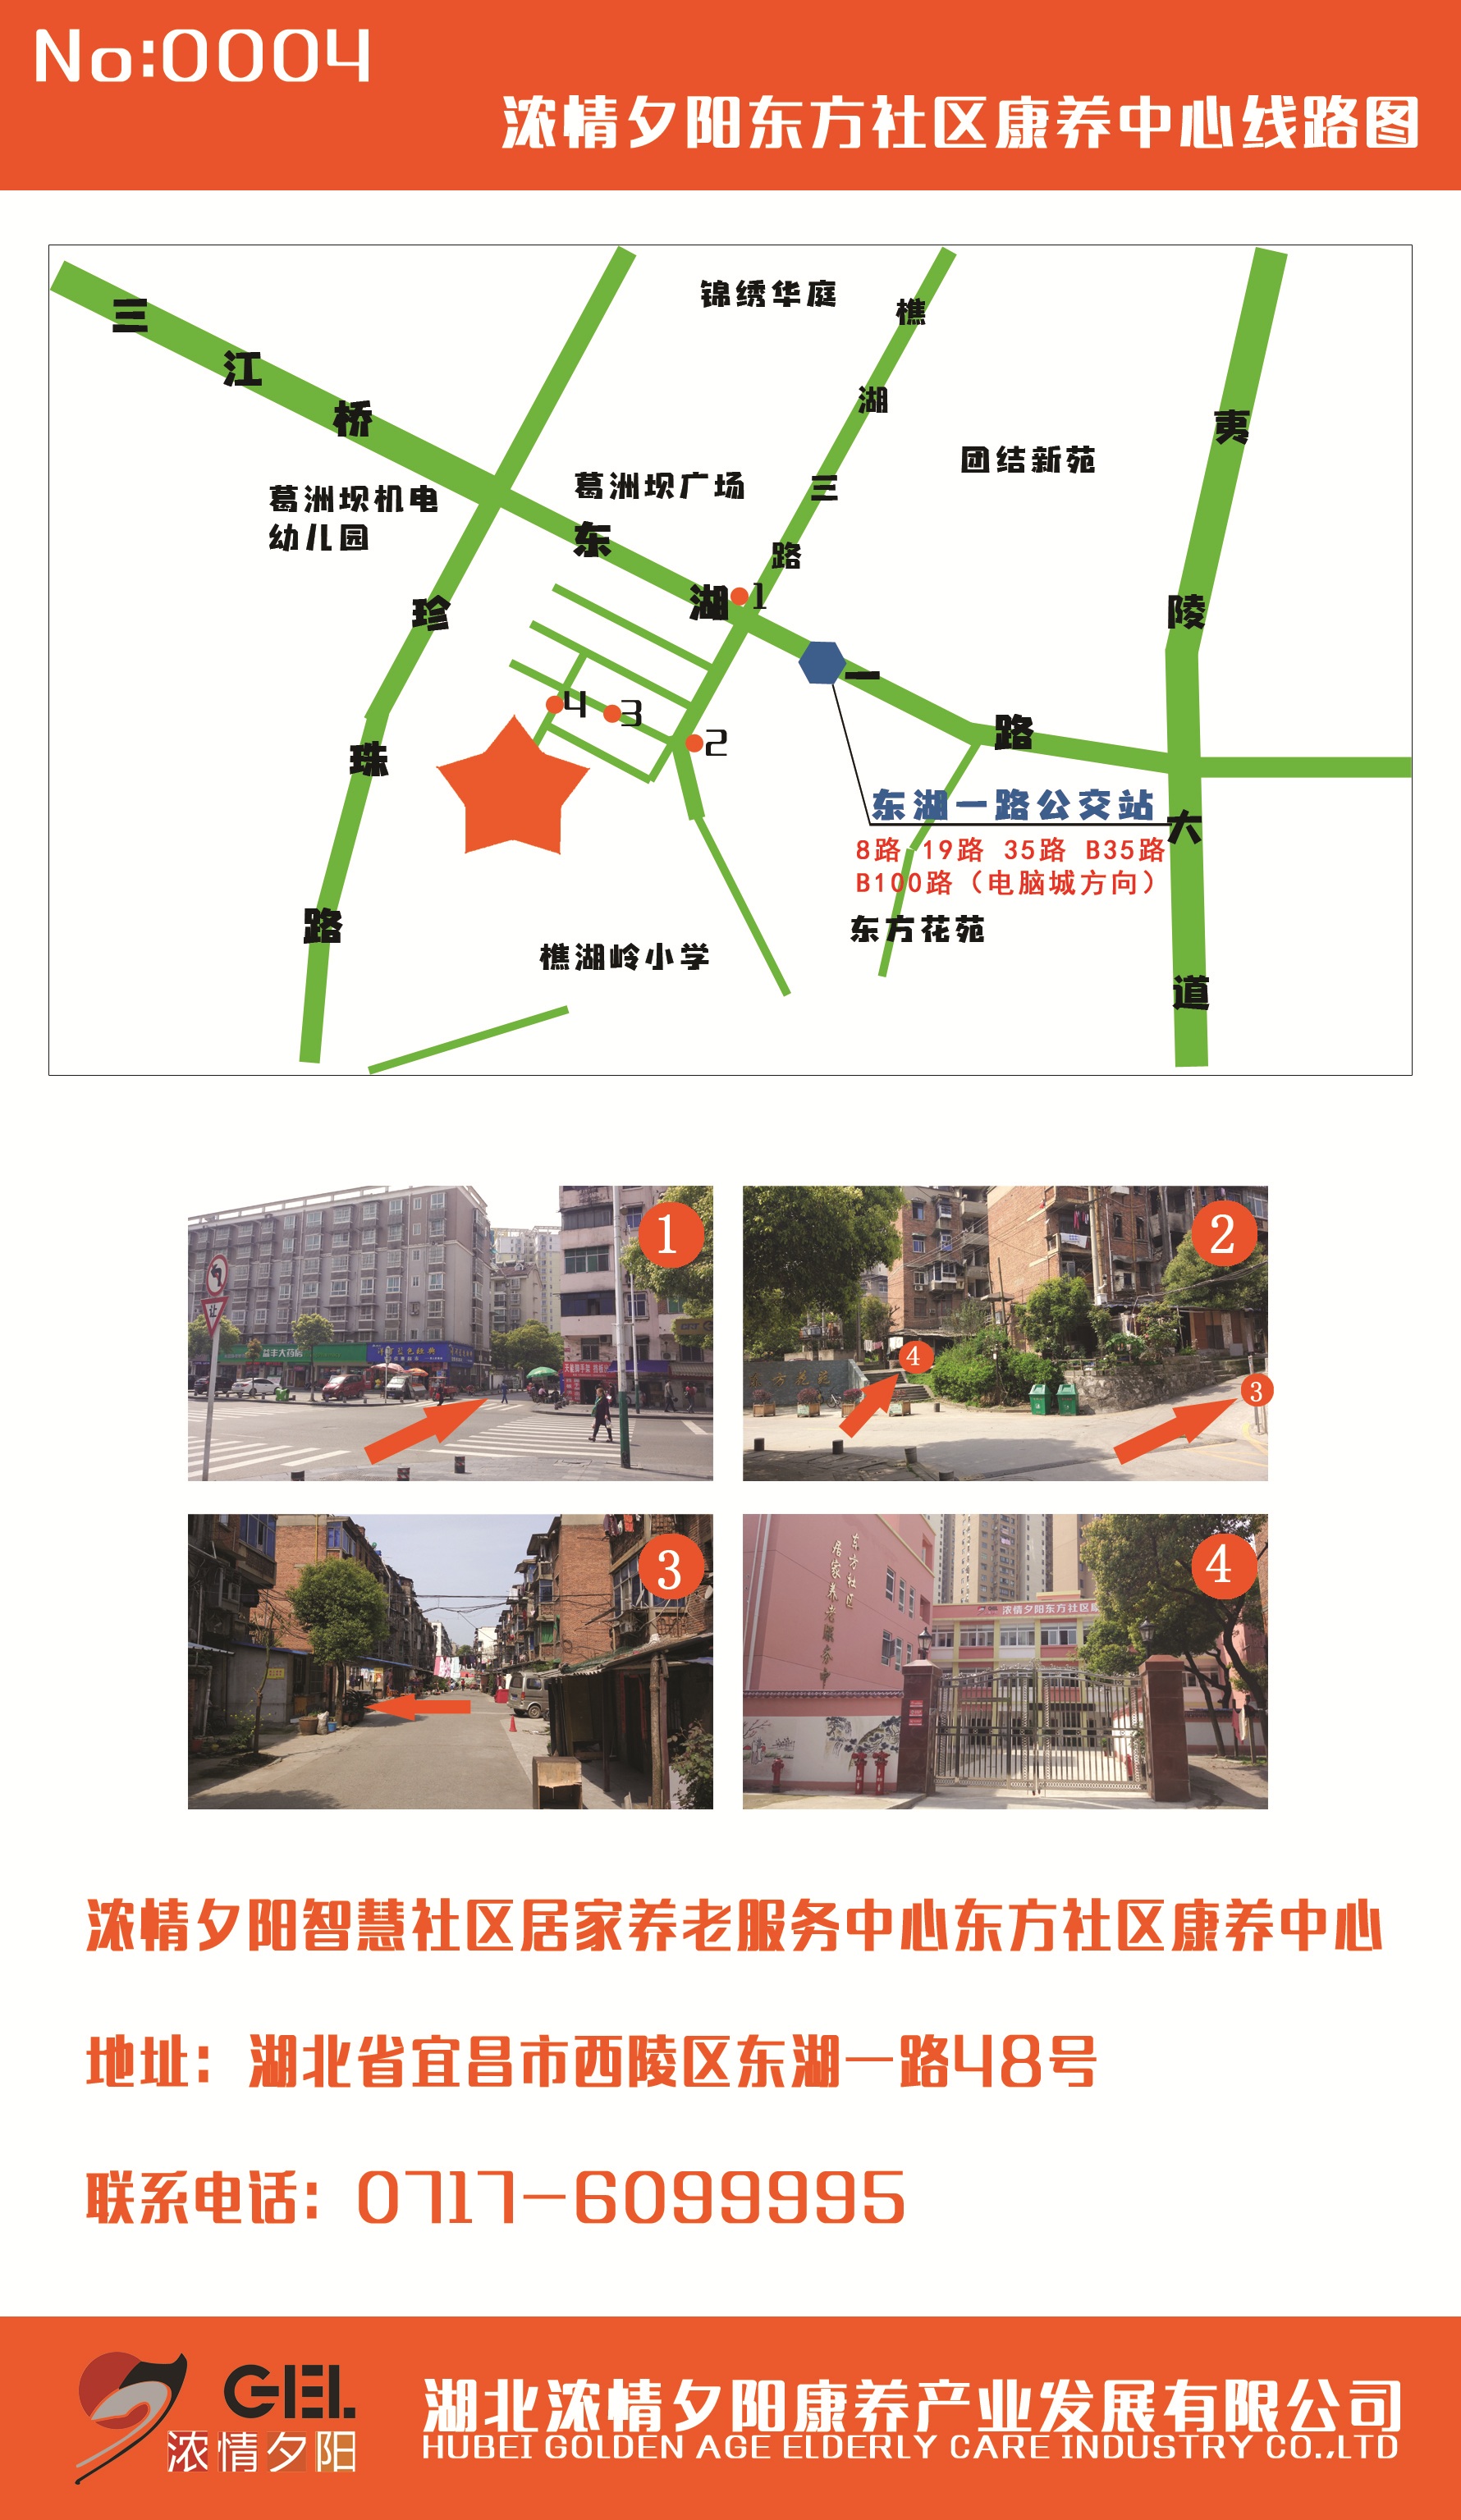 No4东方社区康养中心地图.jpg